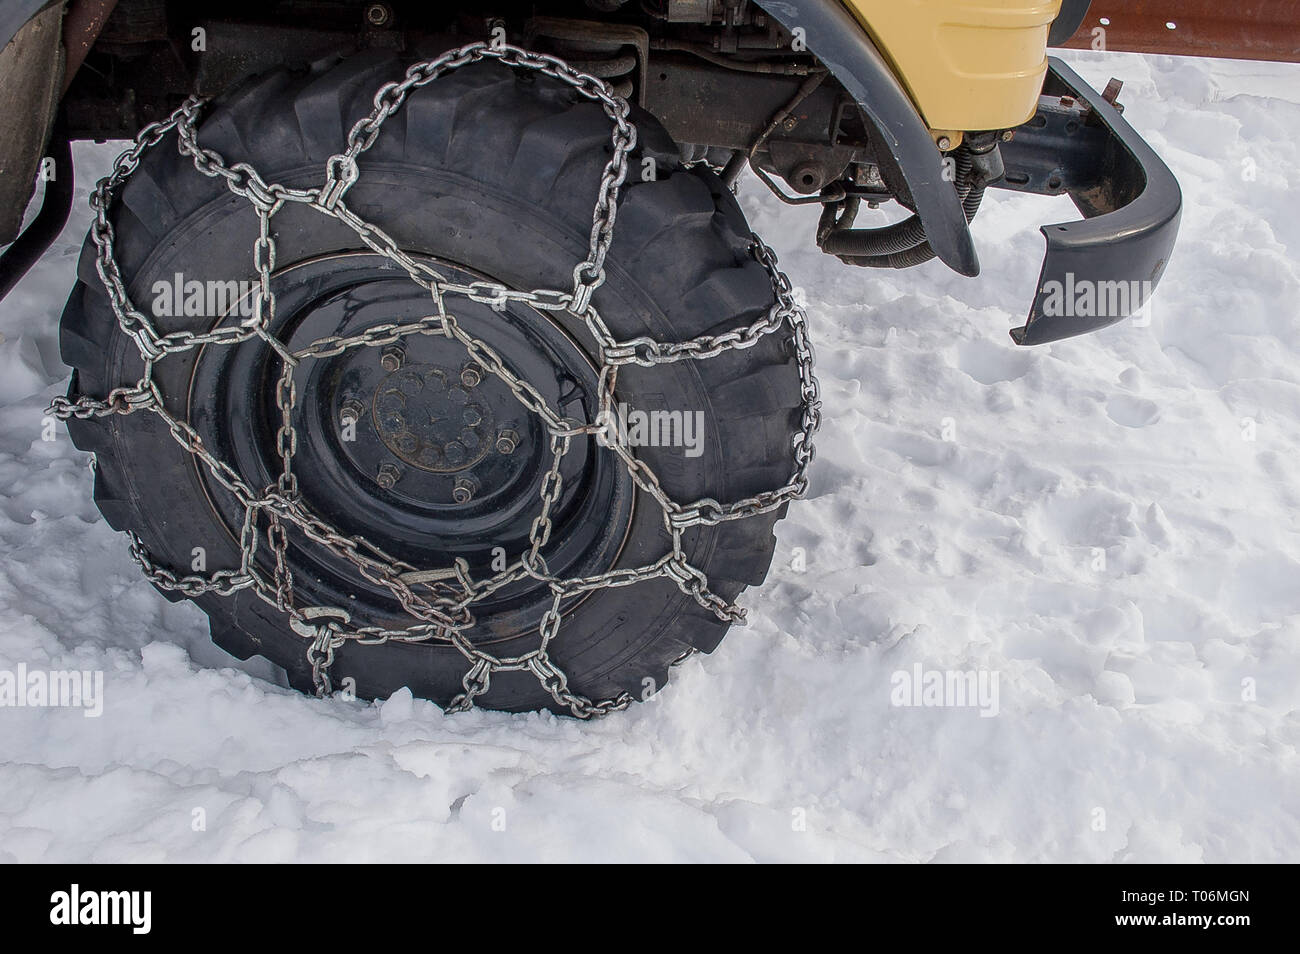 Schneekette - snow chain 01 Stock Photo - Alamy